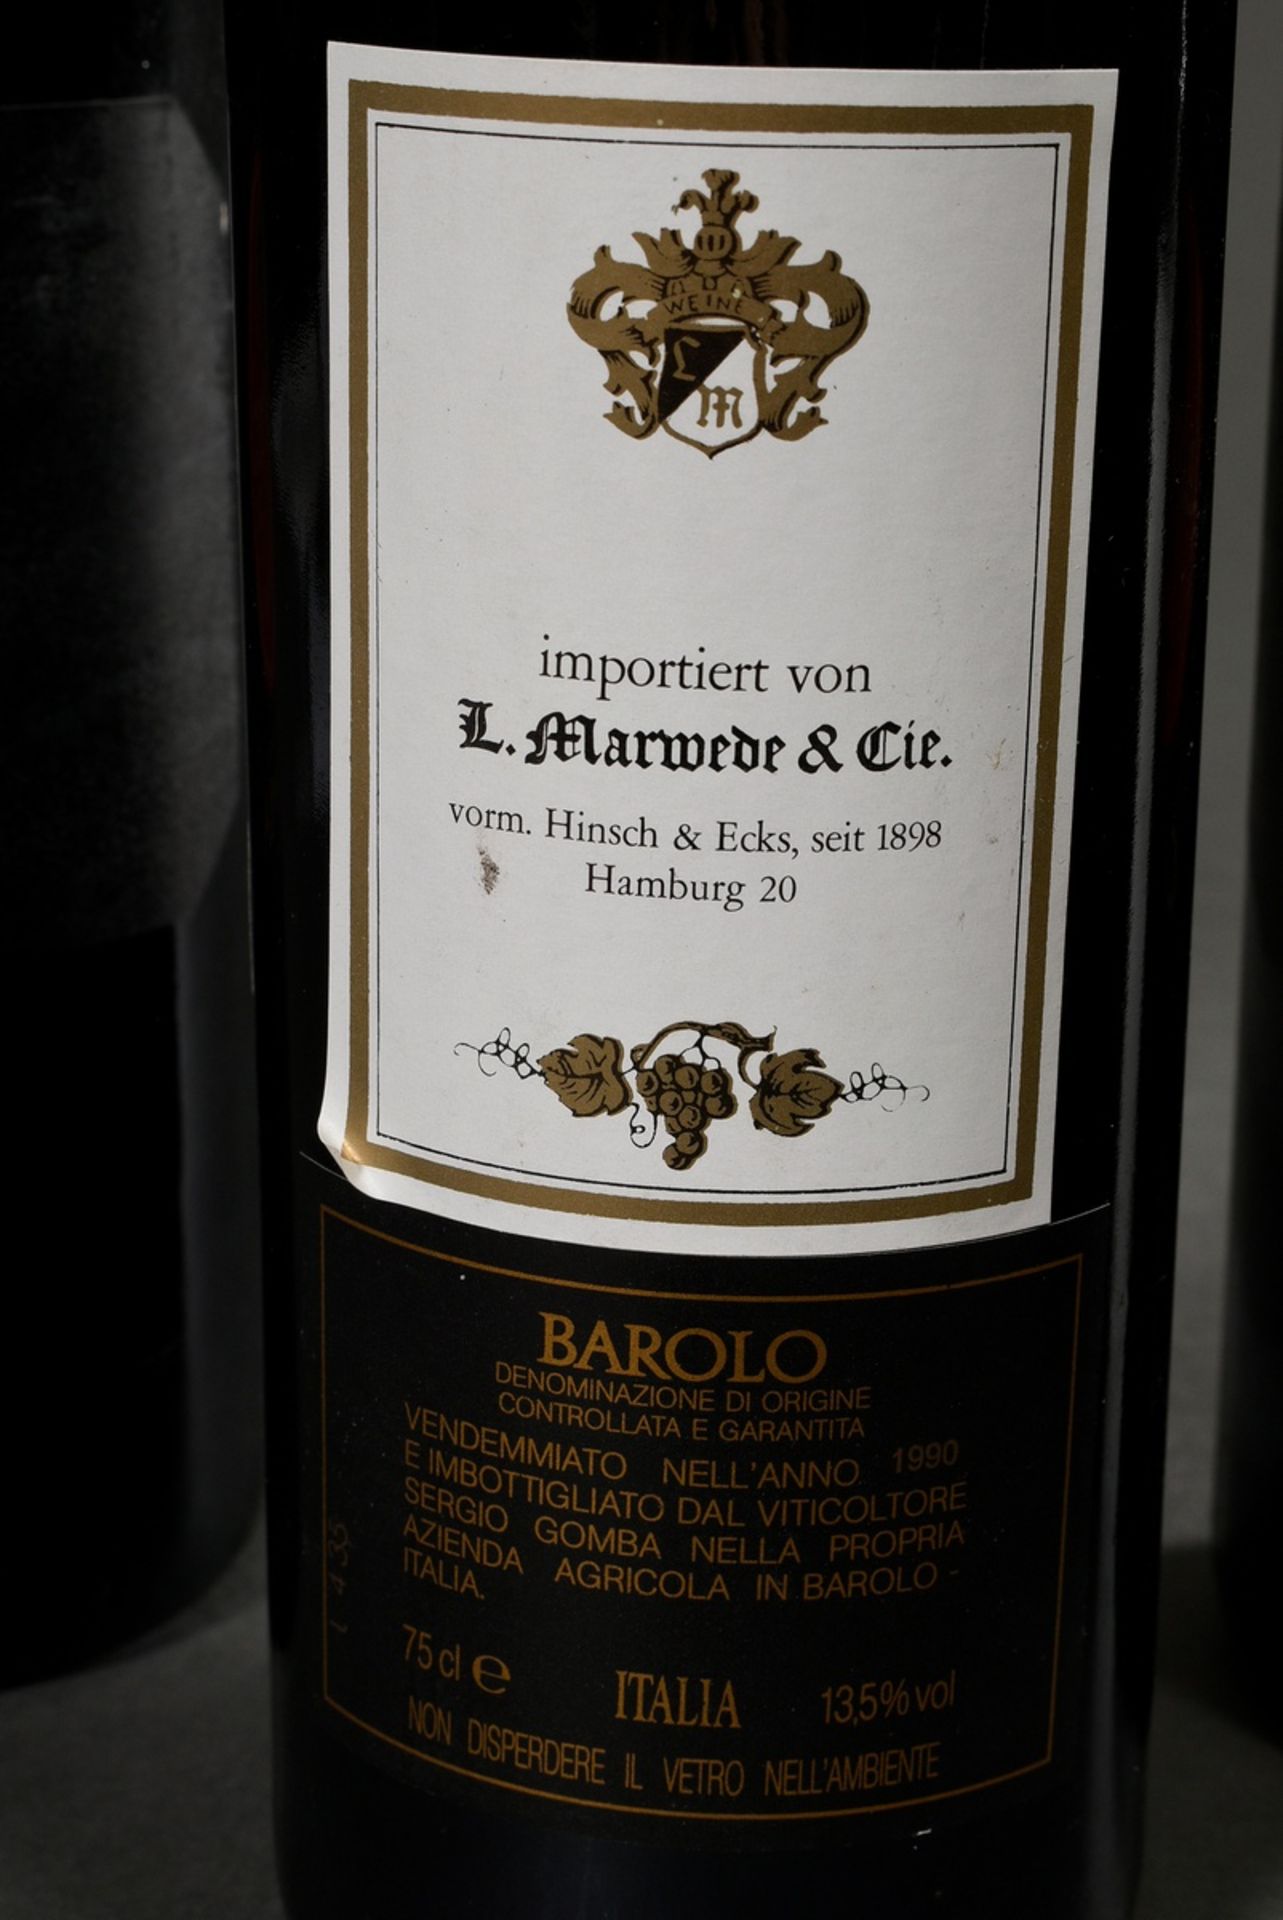 6 Bottles 1990 Barolo Boschetti, Agenza Agricola Comba, DOCG, red wine, Italy, 0,75l, in - Image 2 of 6